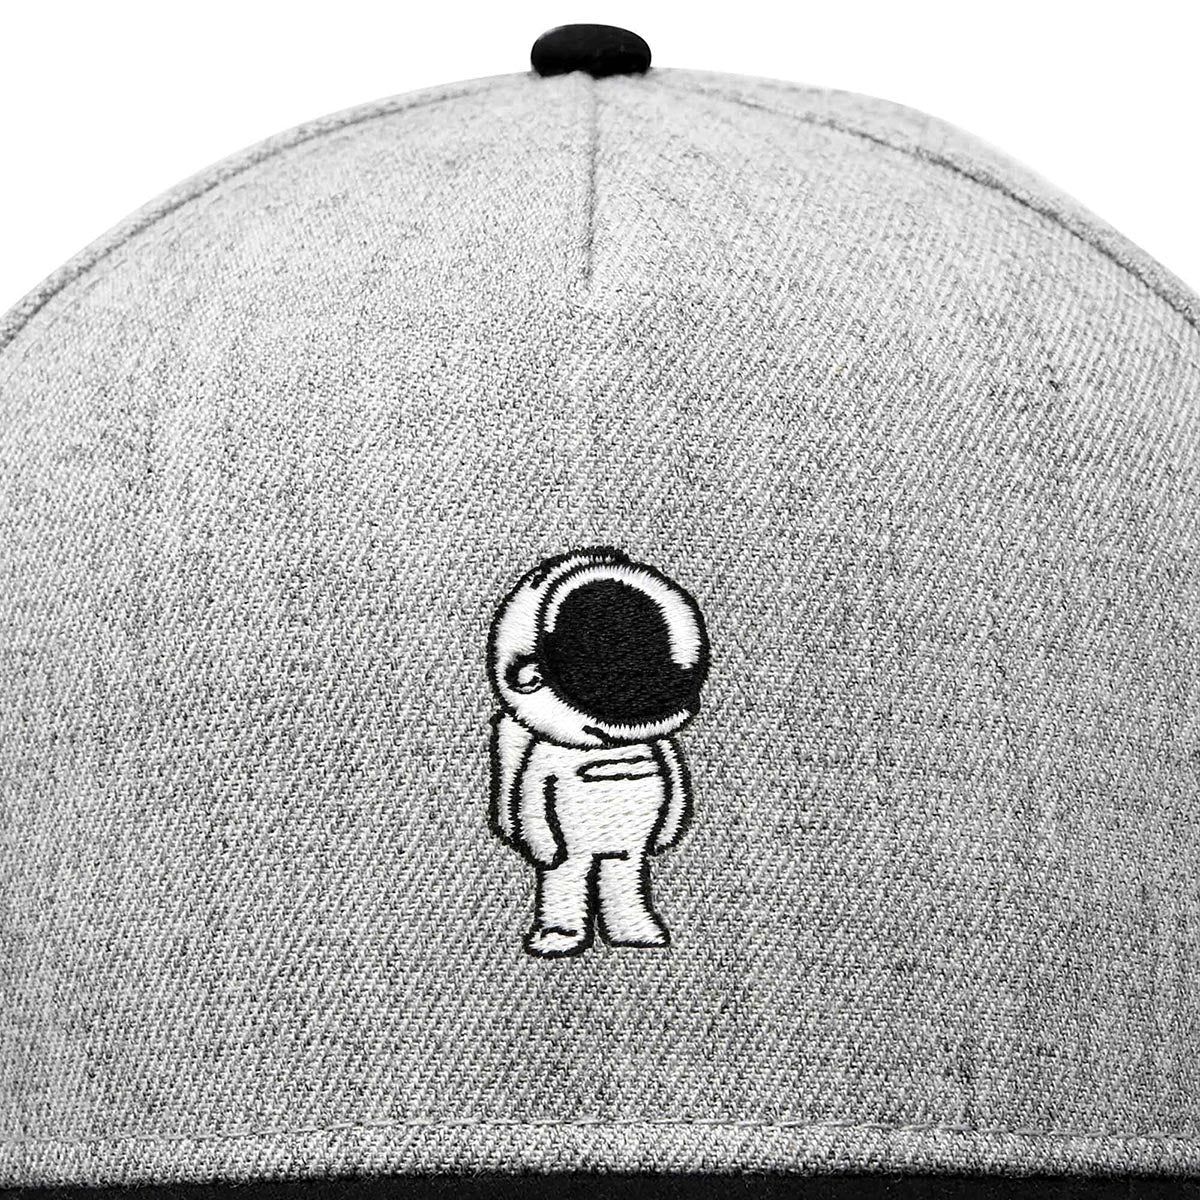 Dalix Astronaut Snapback Hat